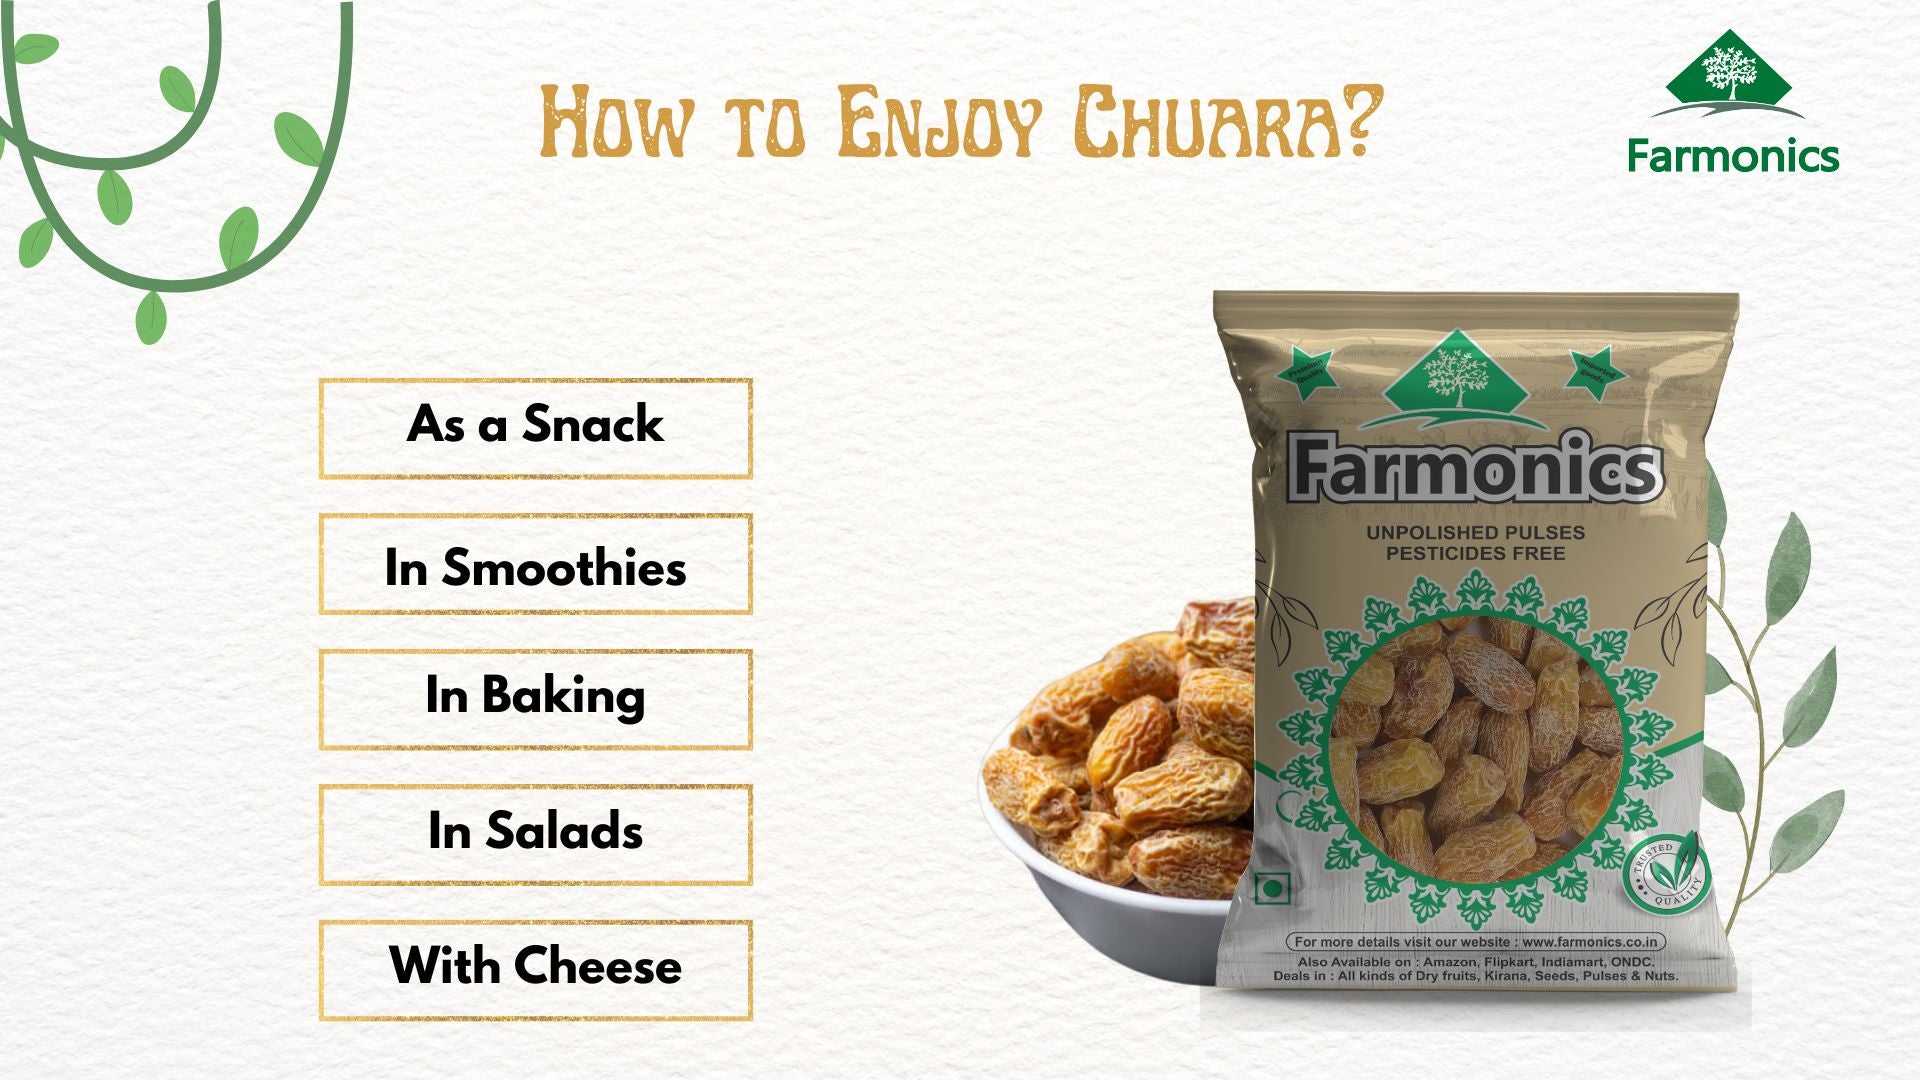 ways in which you can enjoy premium quality chuara from farmonics 